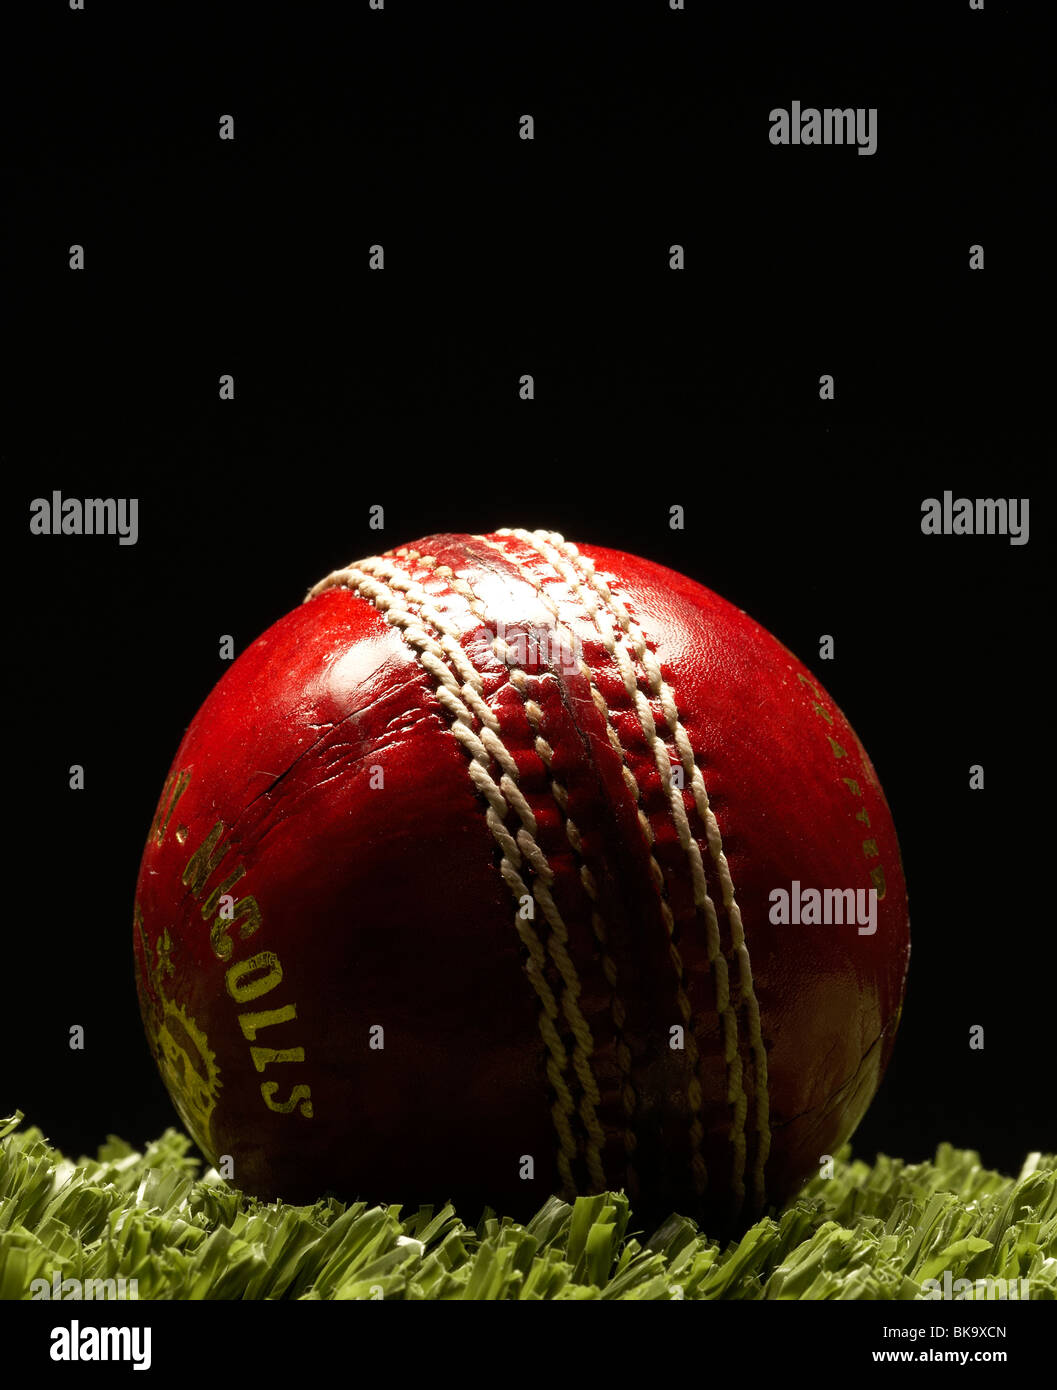 Cricket sulla sfera astroturf Foto Stock